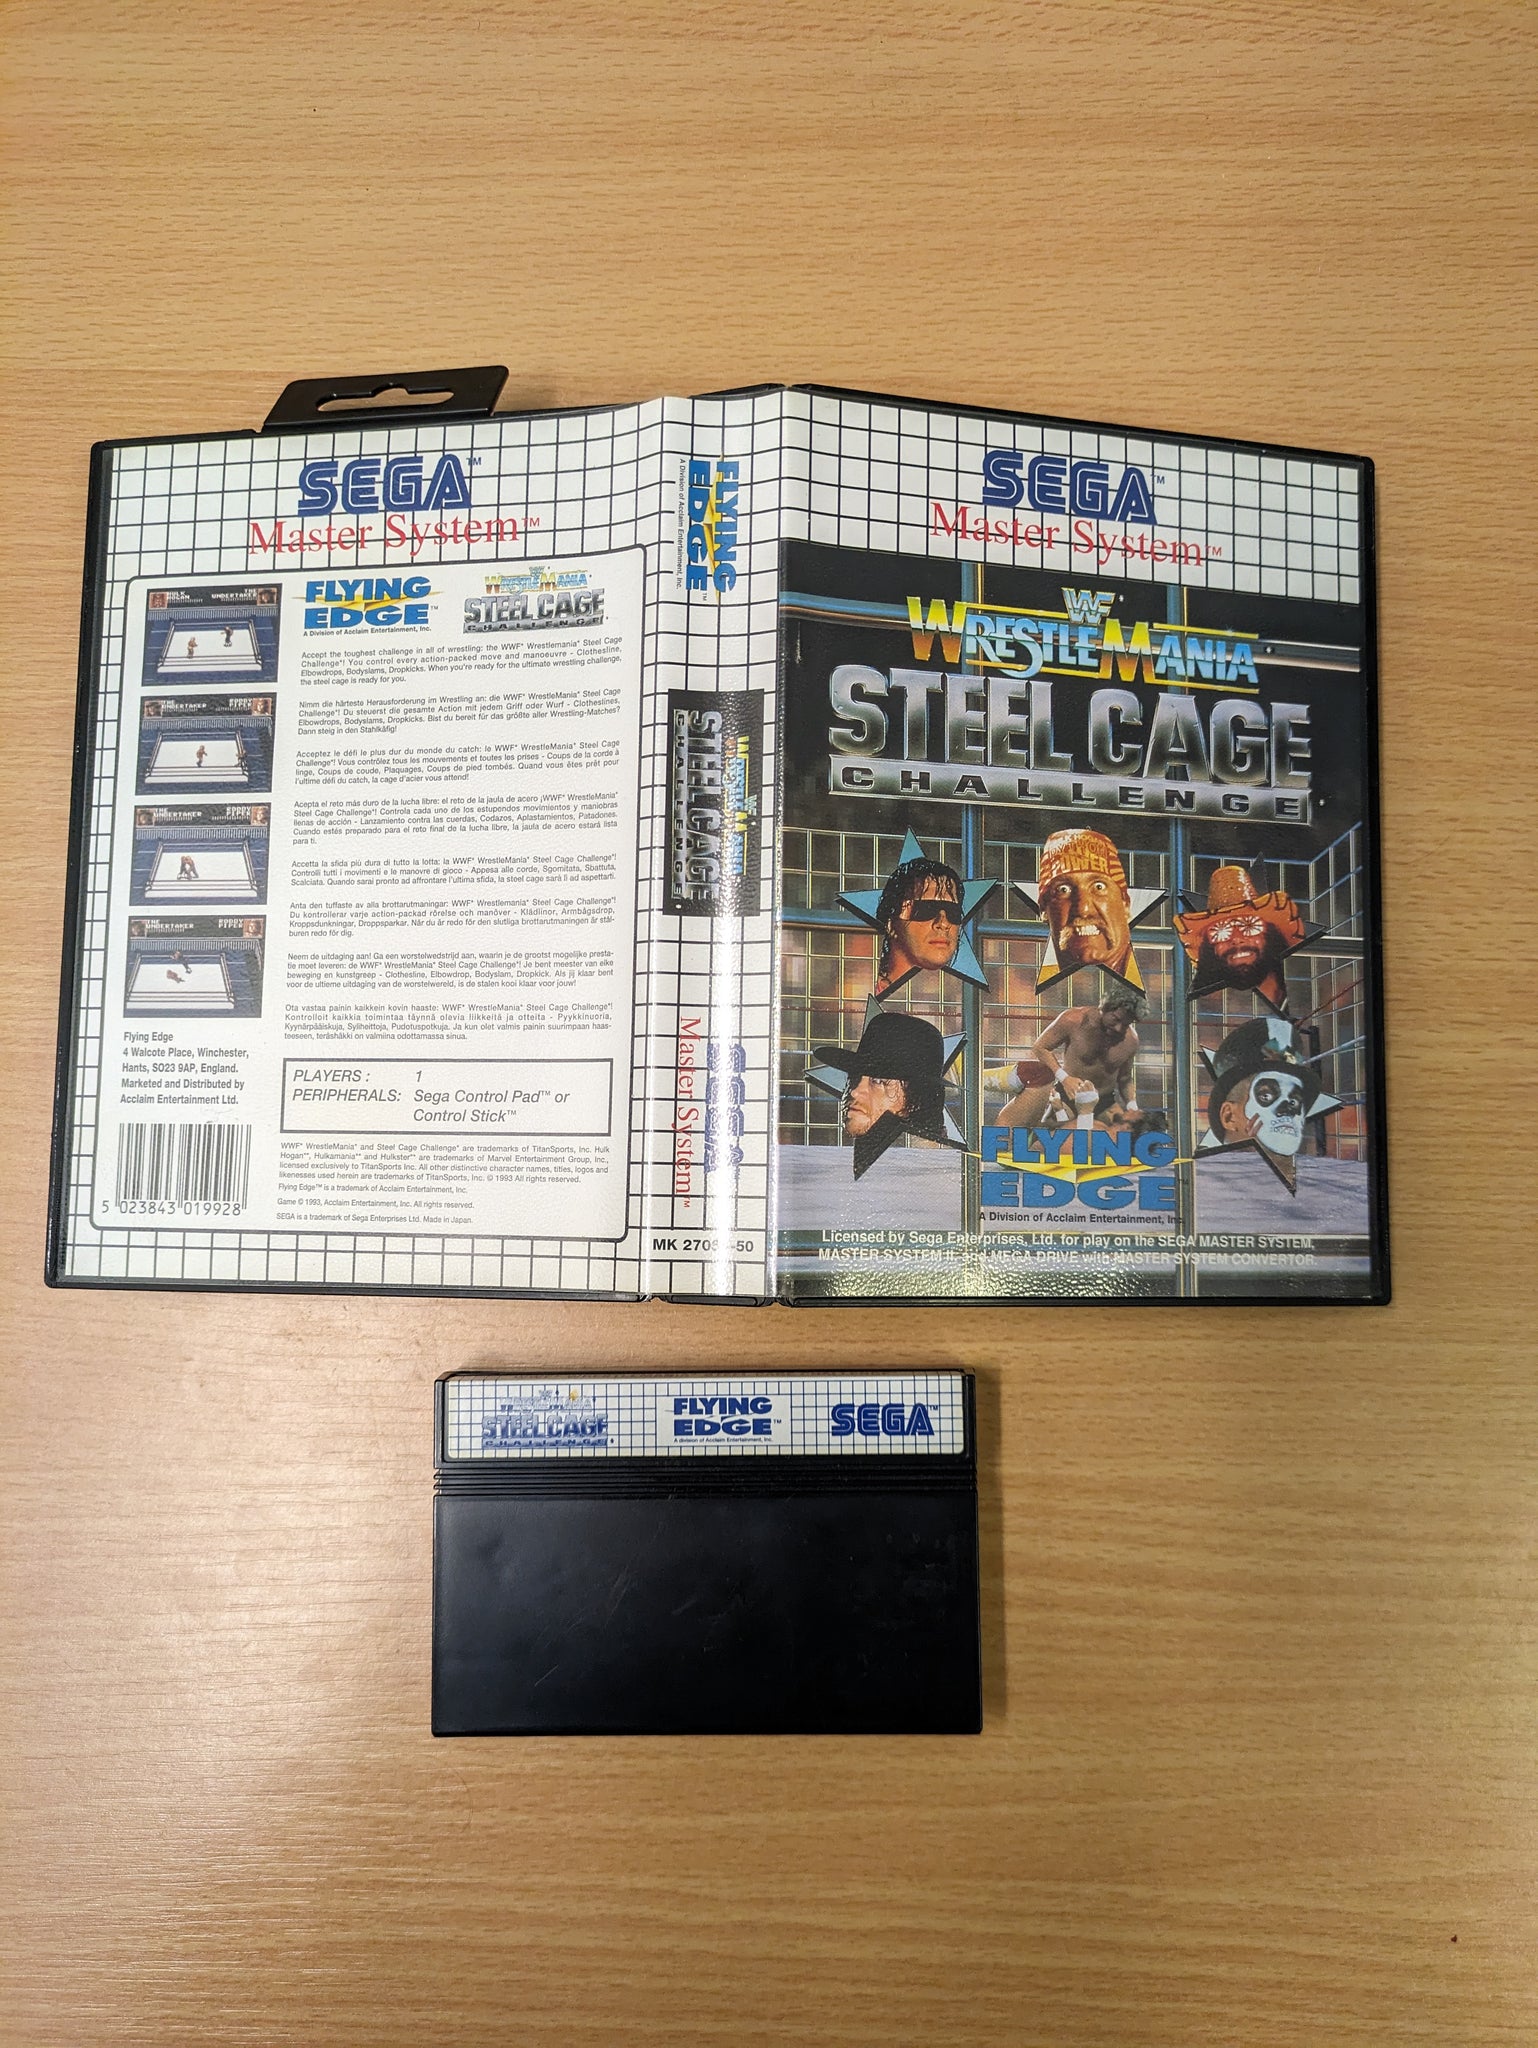 WWF Wrestlemania Steel Cage Challenge Sega Master System game